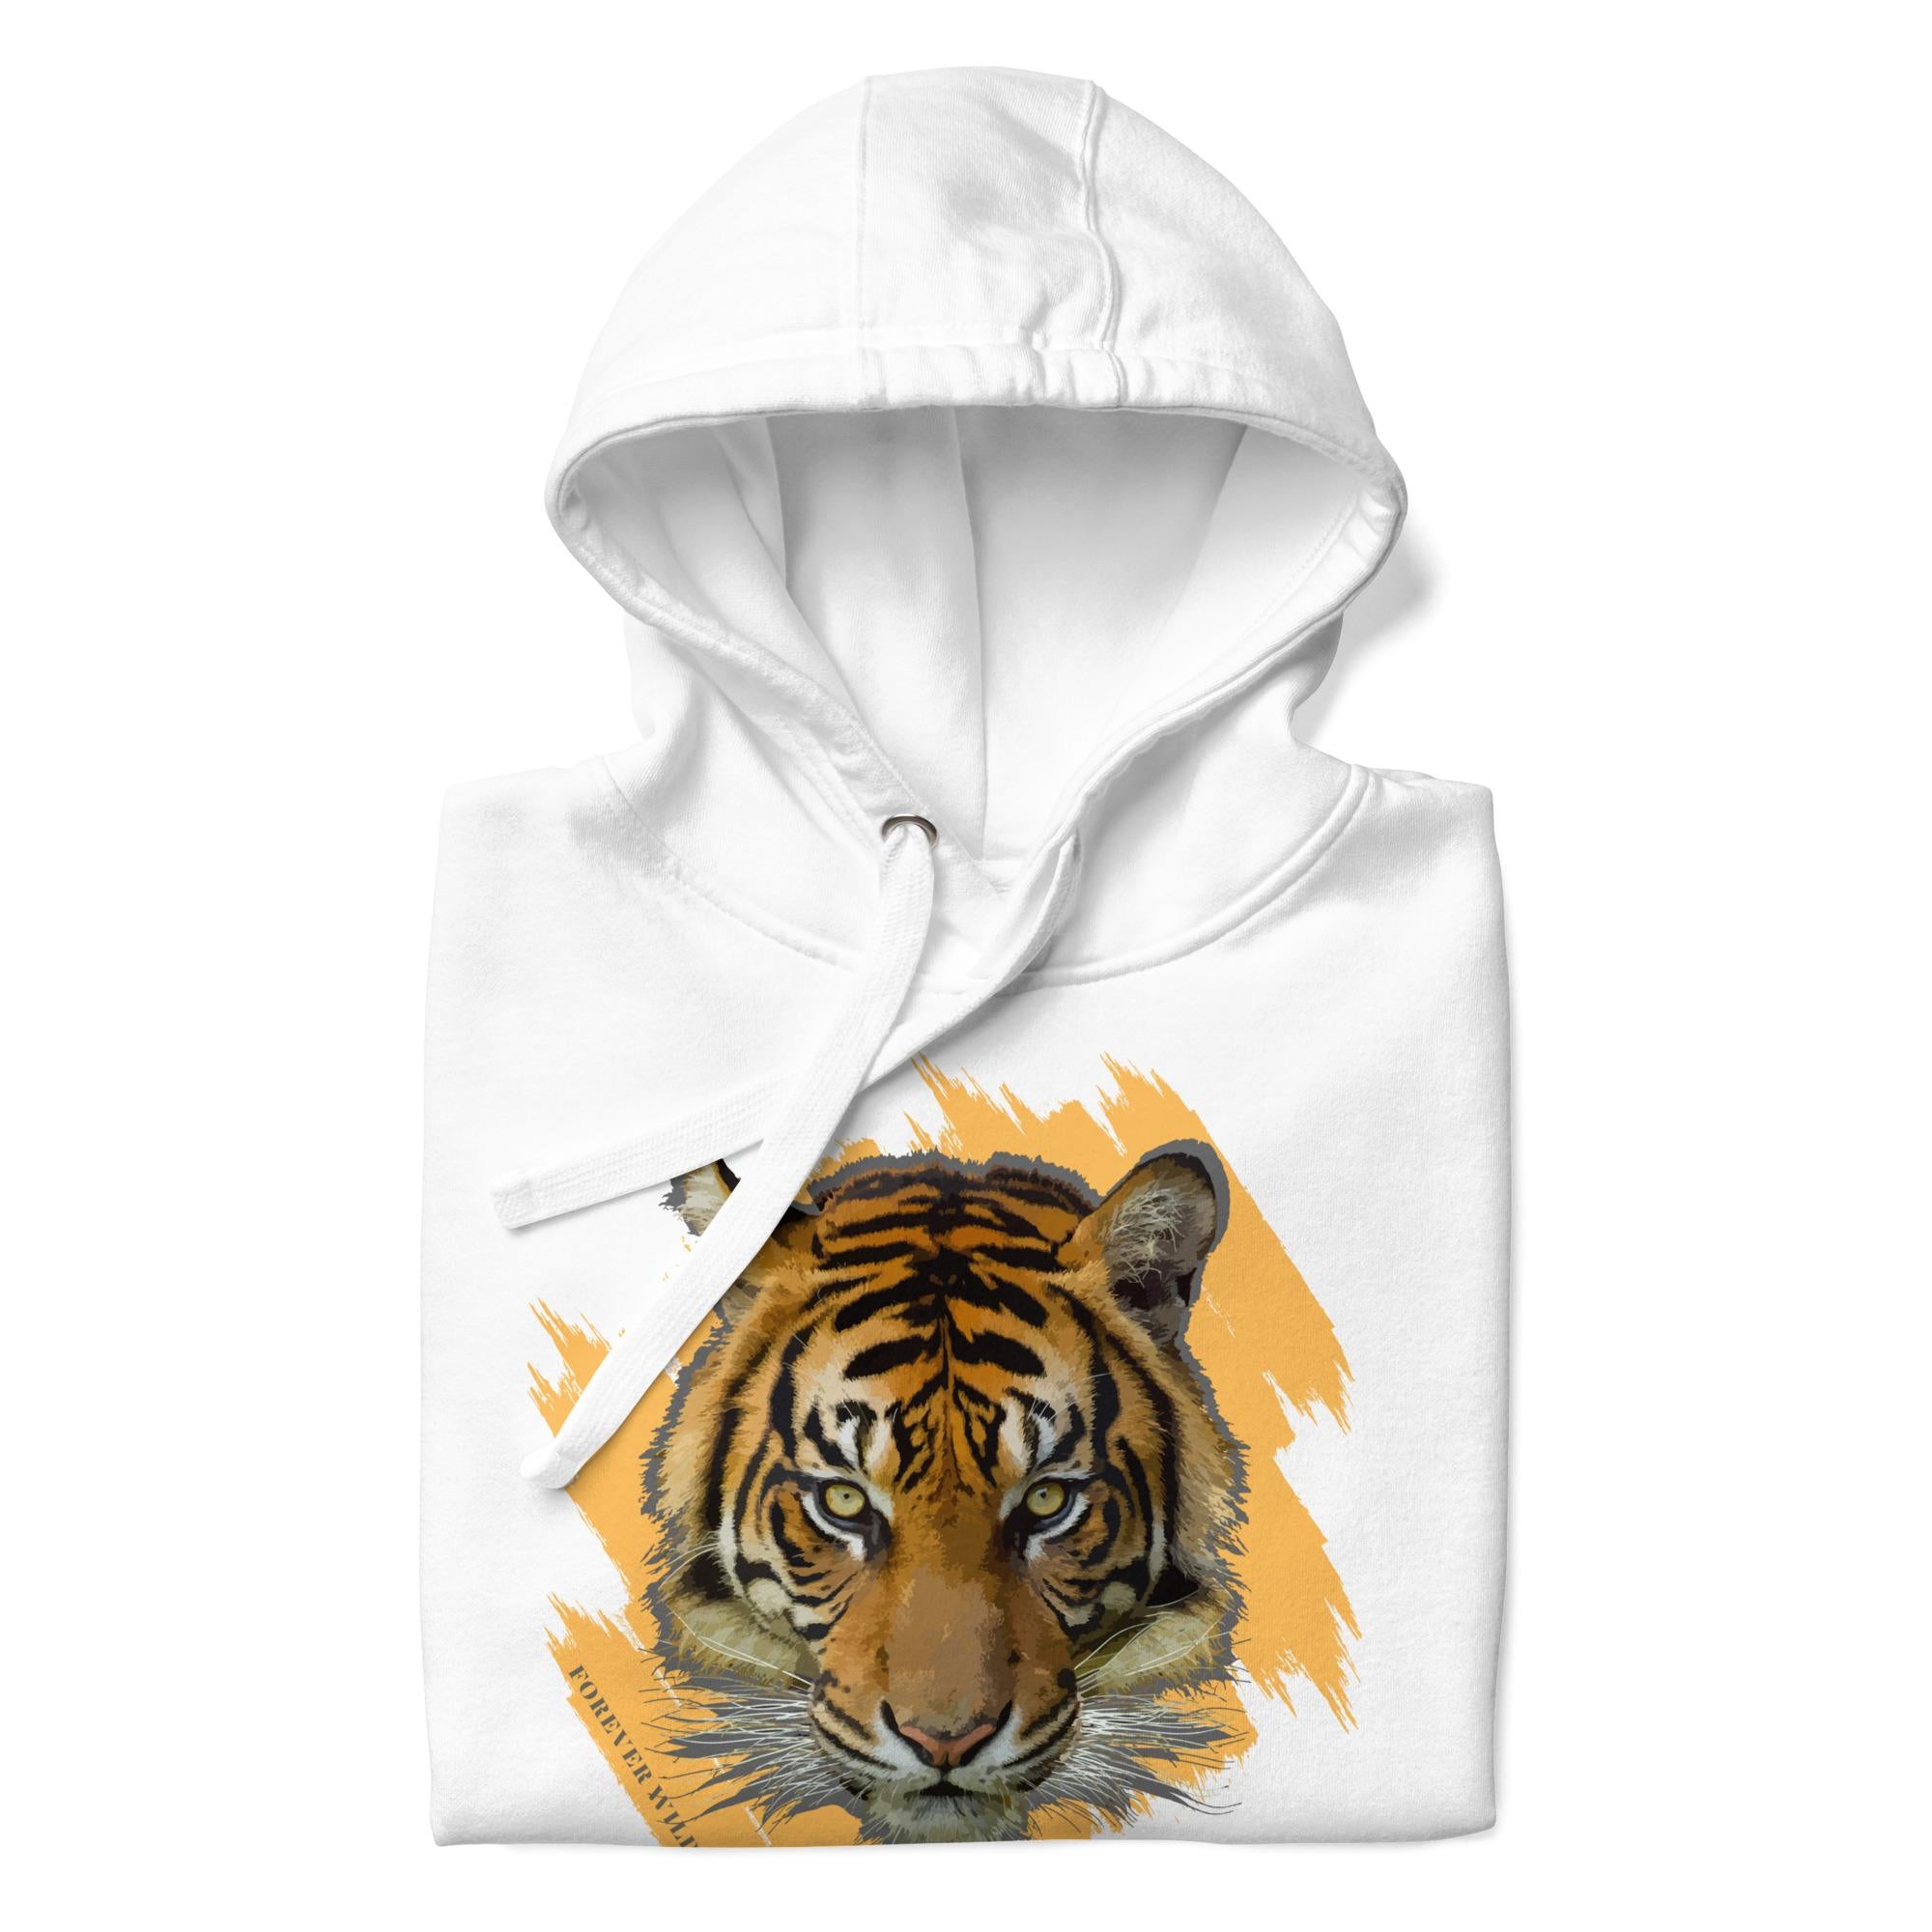 Tiger Face Hoodie in White – Premium Wildlife Animal Inspirational Hoodie Design, part of Wildlife Hoodies & Clothing from Forever Wildlife